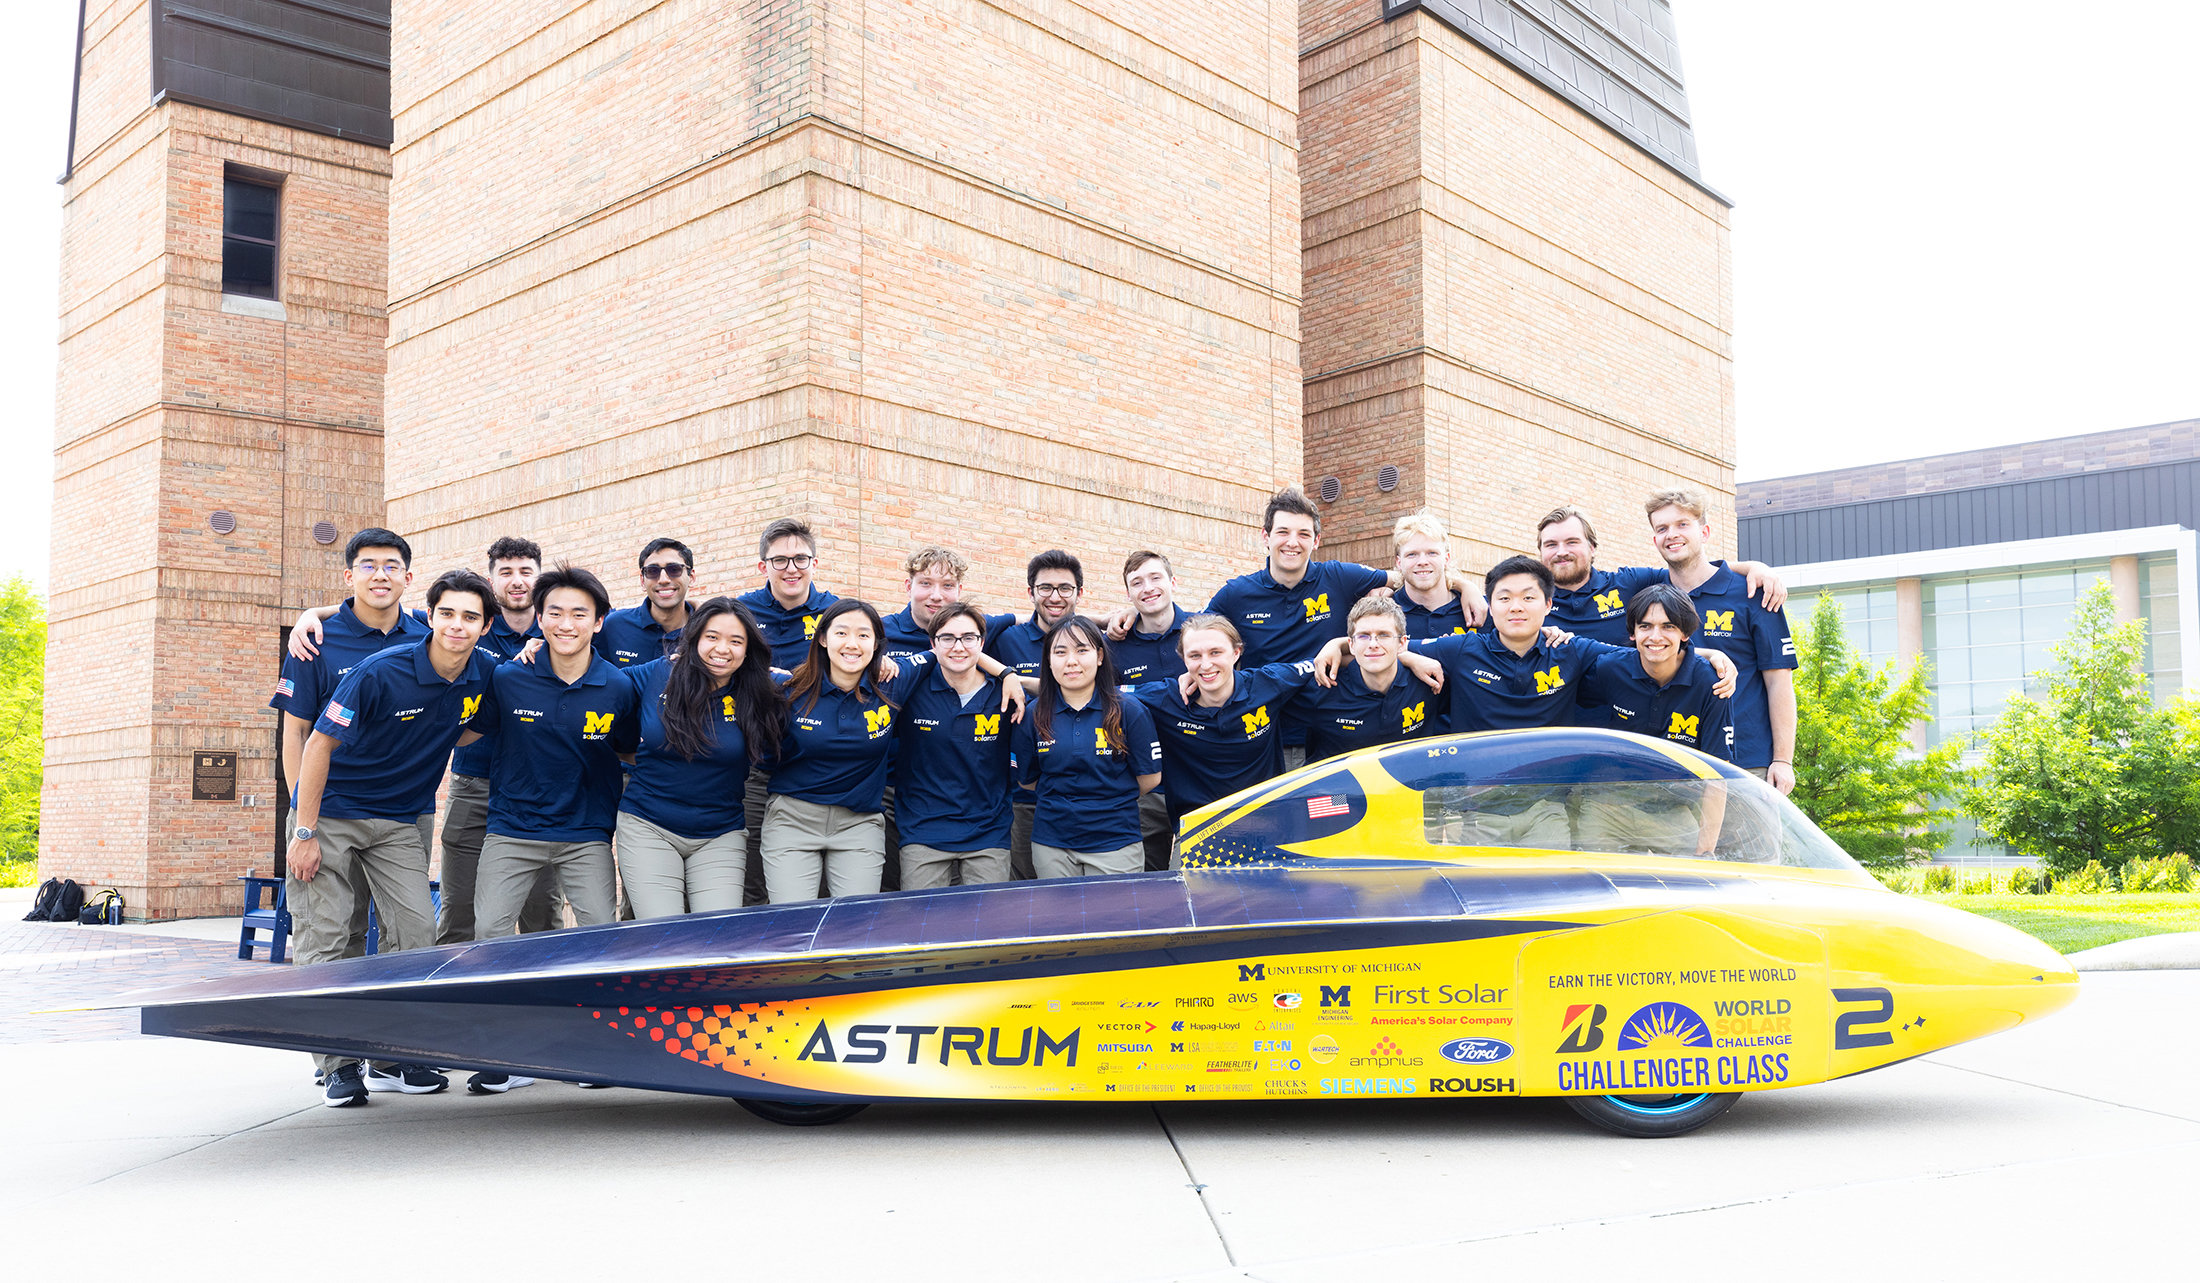 The solar car team poses with Astrum